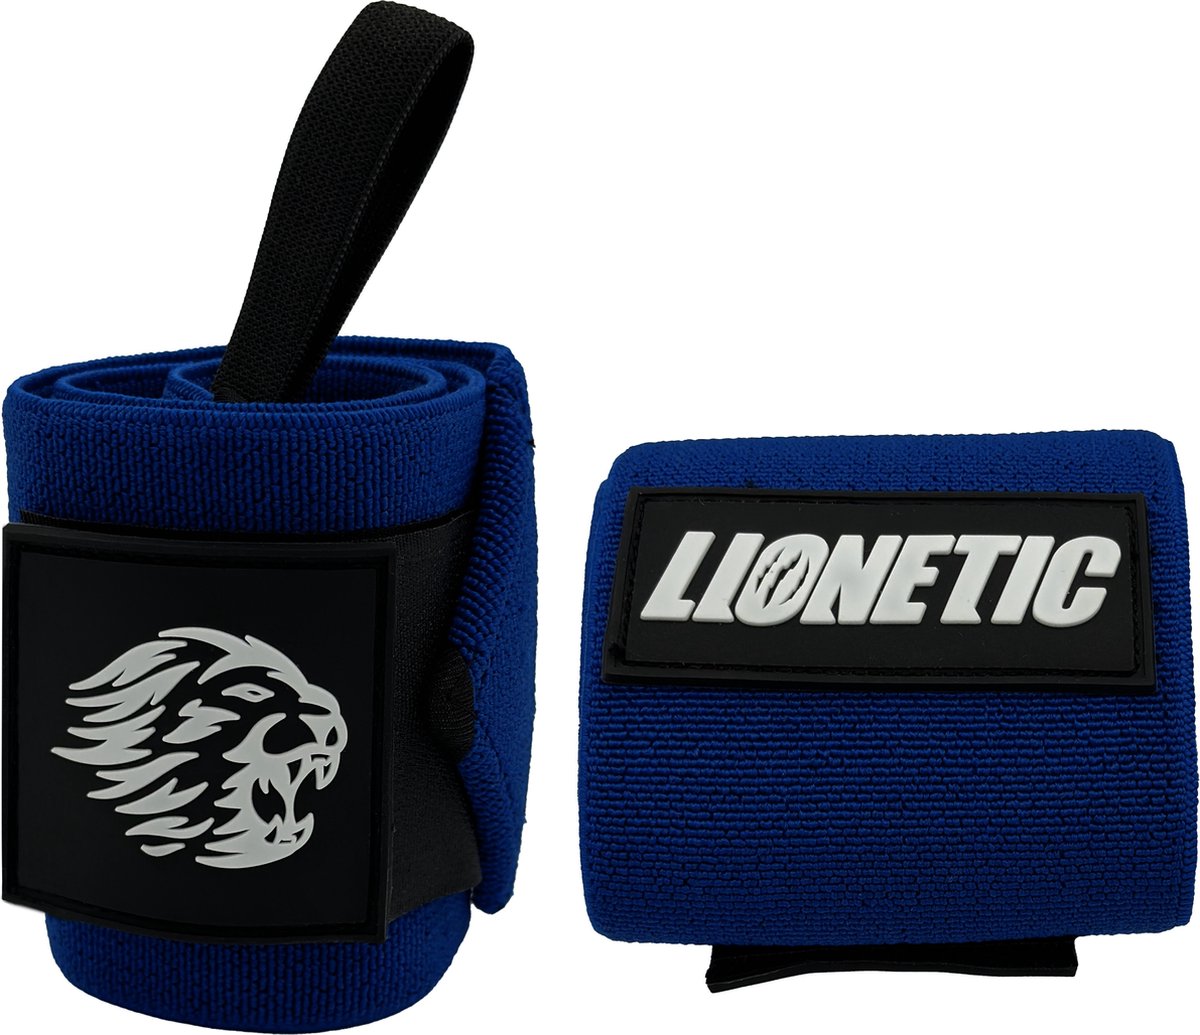 Lionetic Wrist Wraps - Krachttraining Accessoire - Polsbanden - Lifting Straps - Geschikt voor Powerlifting, Crossfit en Fitness - Azure Blue